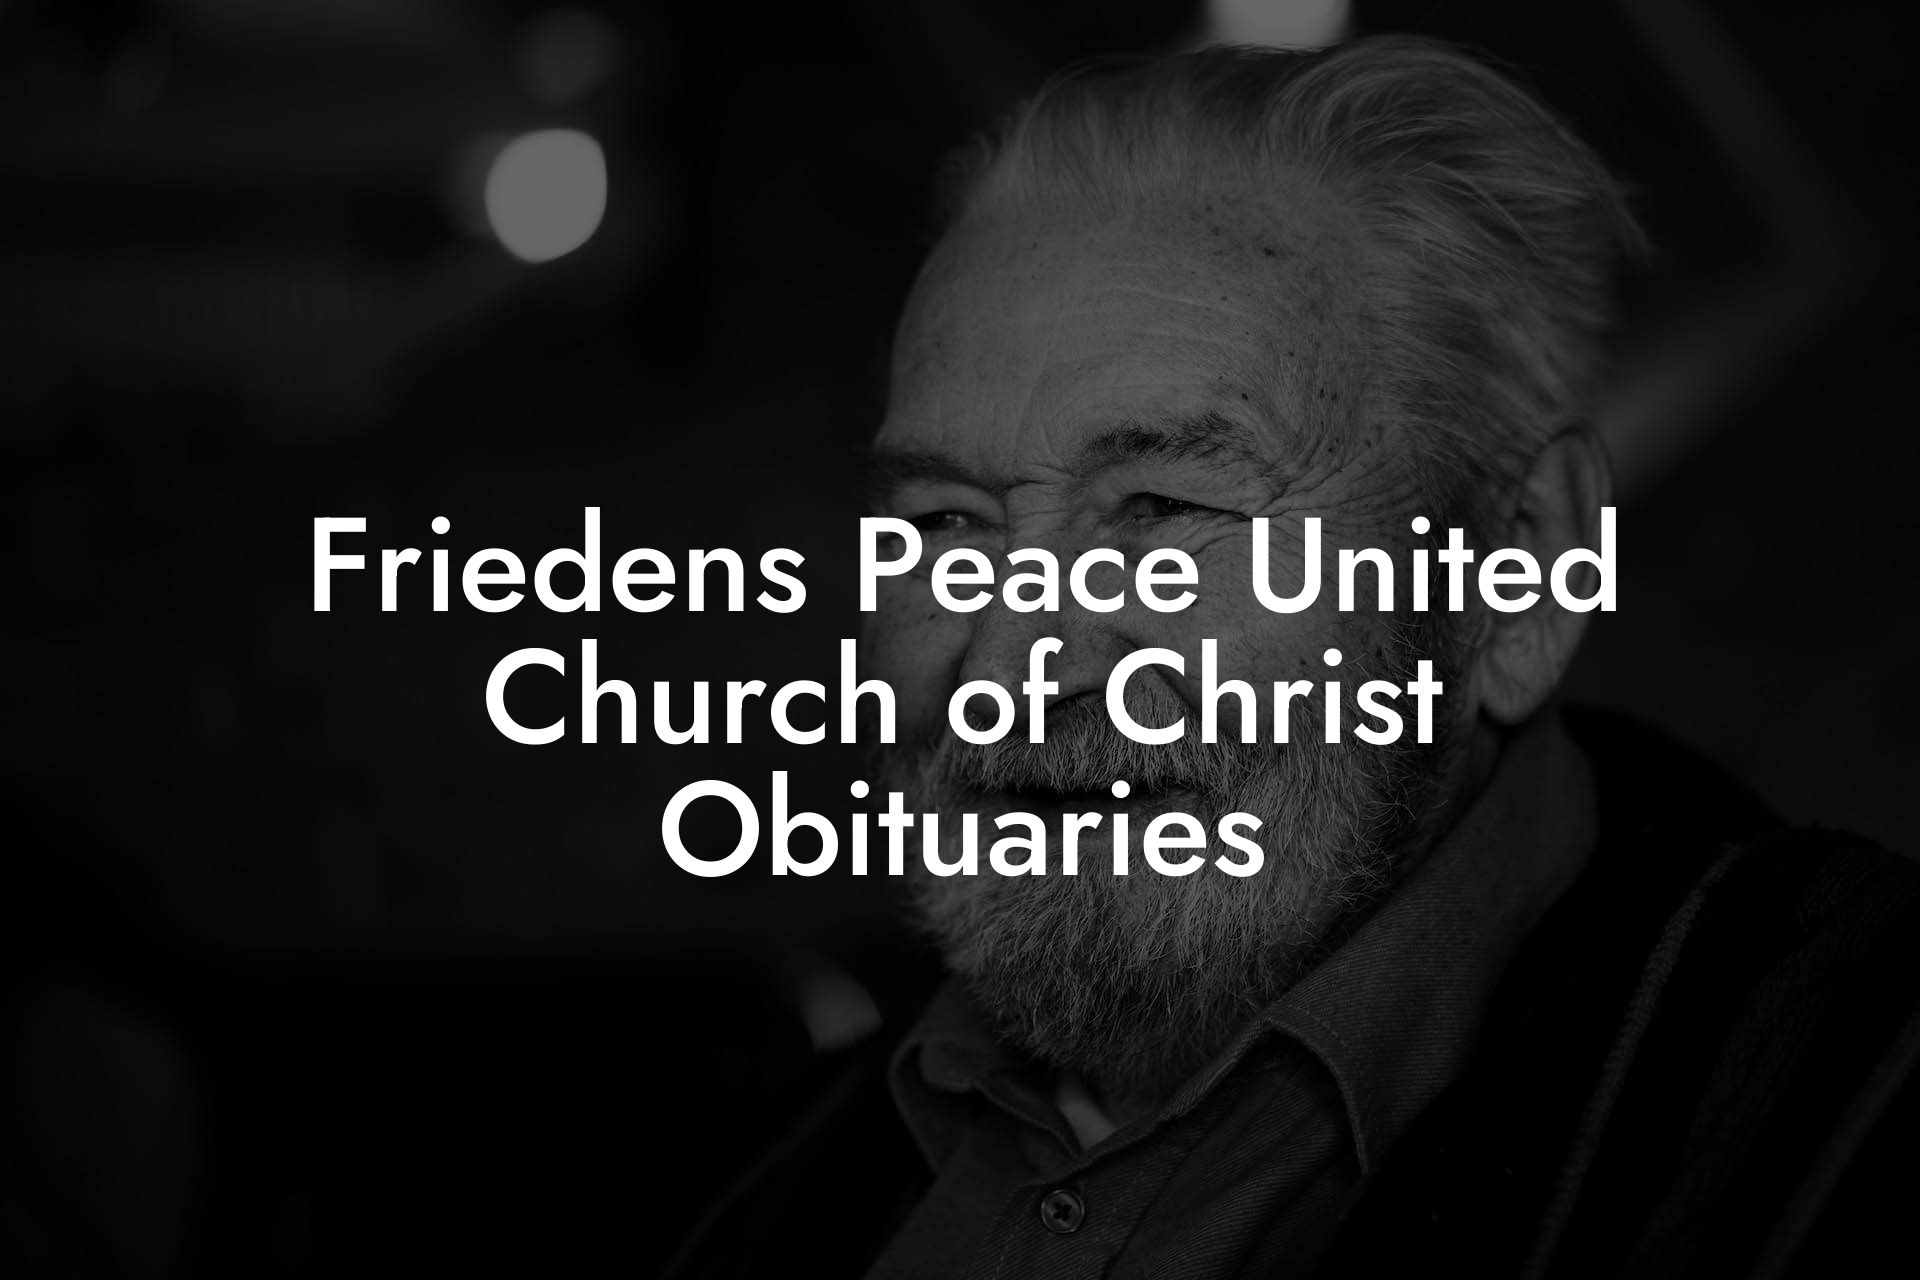 Friedens Peace United Church of Christ Obituaries